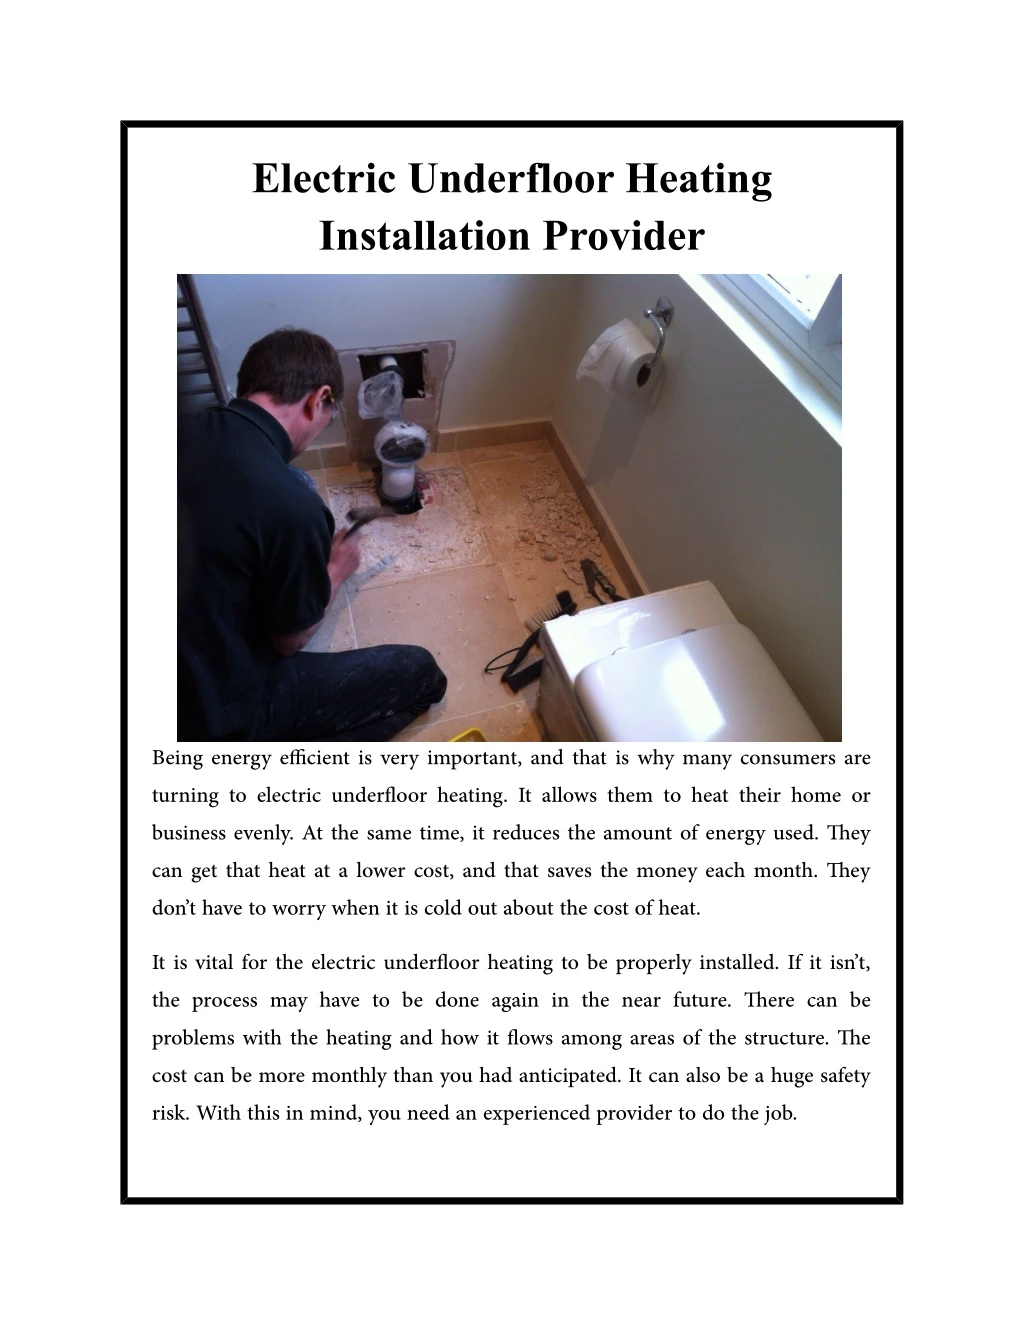 electric underfloor heating installation provider n.